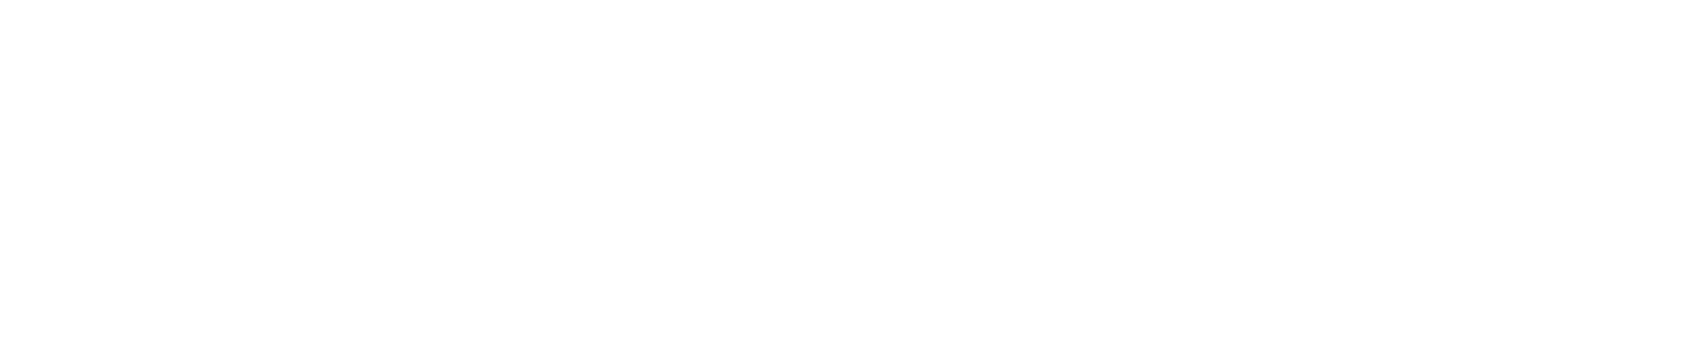 Arons & Solomon Divorce Lawyers